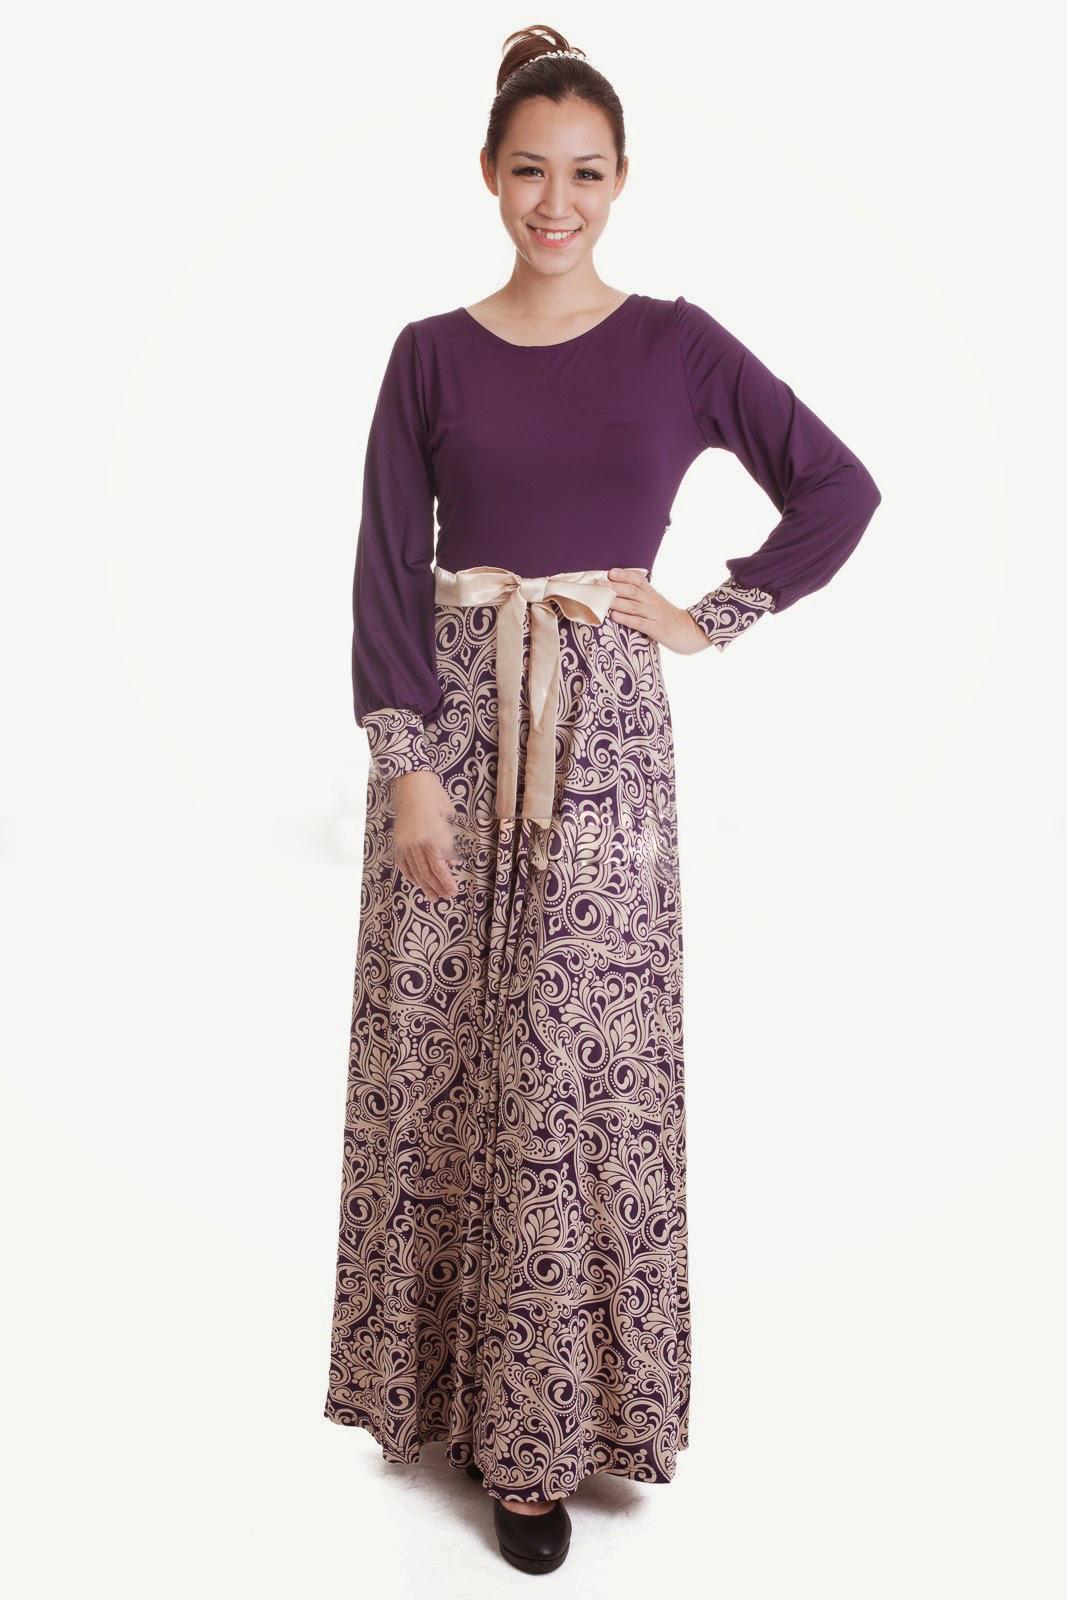 Muslimah Fashion for sale Muslim Women Clothing online 